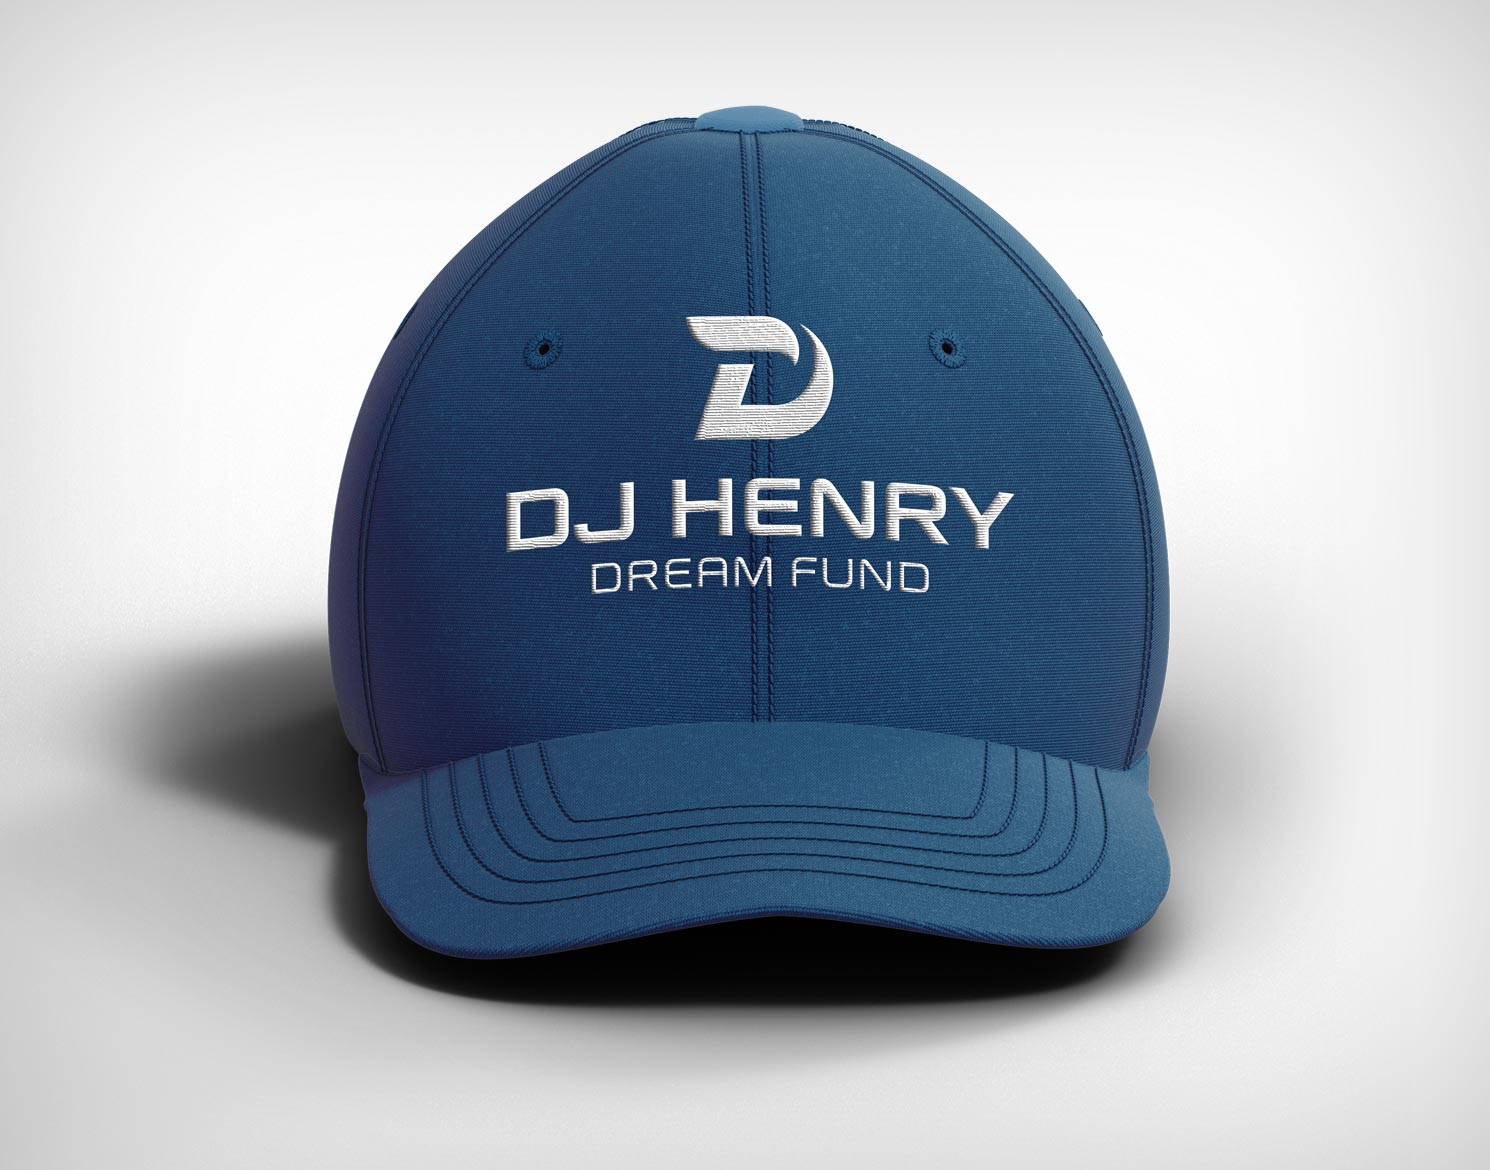 DJ Henry Dream Fund logo on a baseball cap